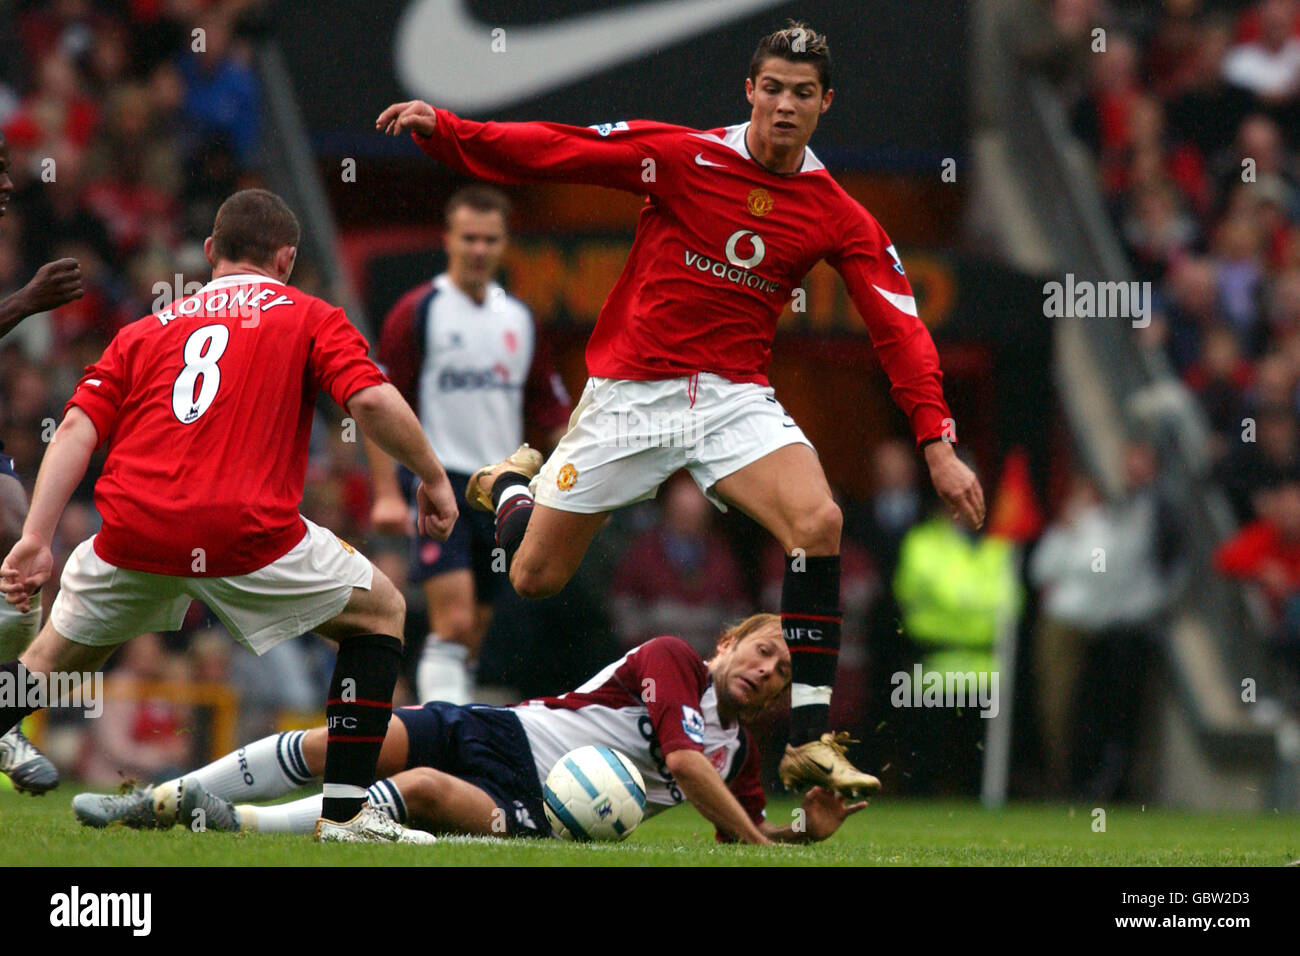 Wayne Rooney de Manchester United (l) attend le ballon alors que son  coéquipier Cristiano Ronaldo (r) saute un défi de Gaizka Mendieta de  Middlesbrough (plancher Photo Stock - Alamy